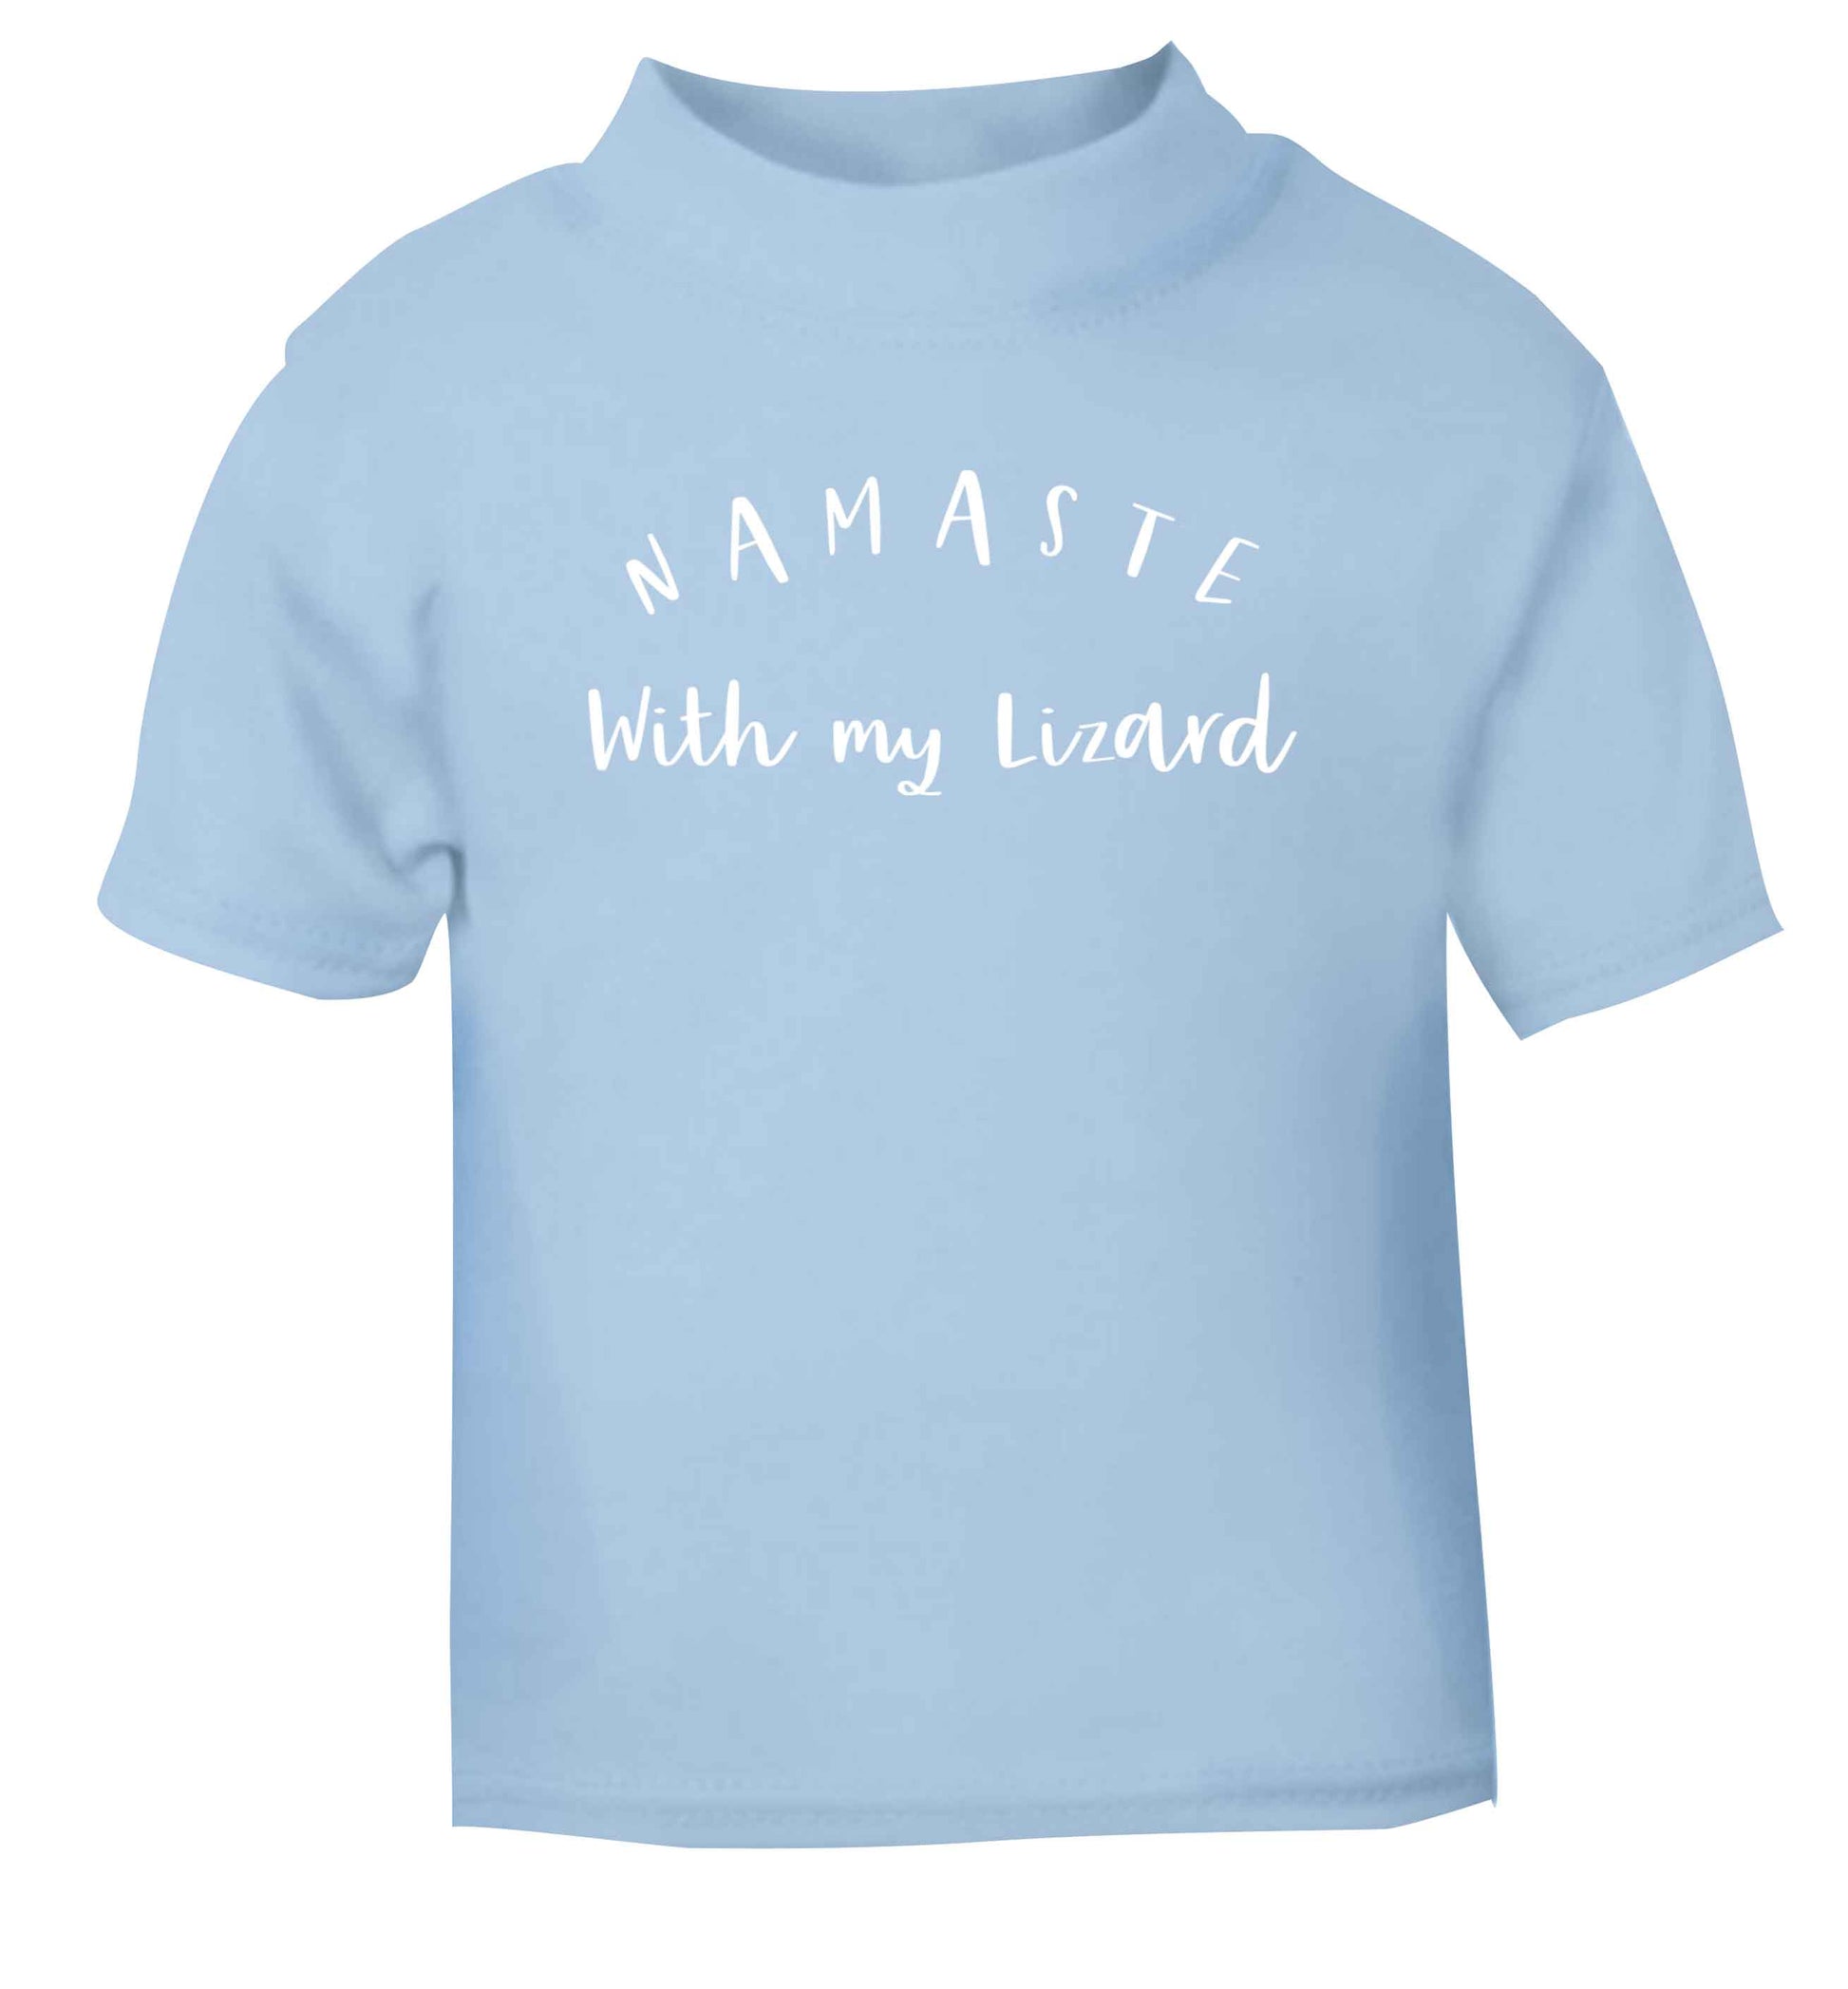 Namaste with my lizard light blue Baby Toddler Tshirt 2 Years